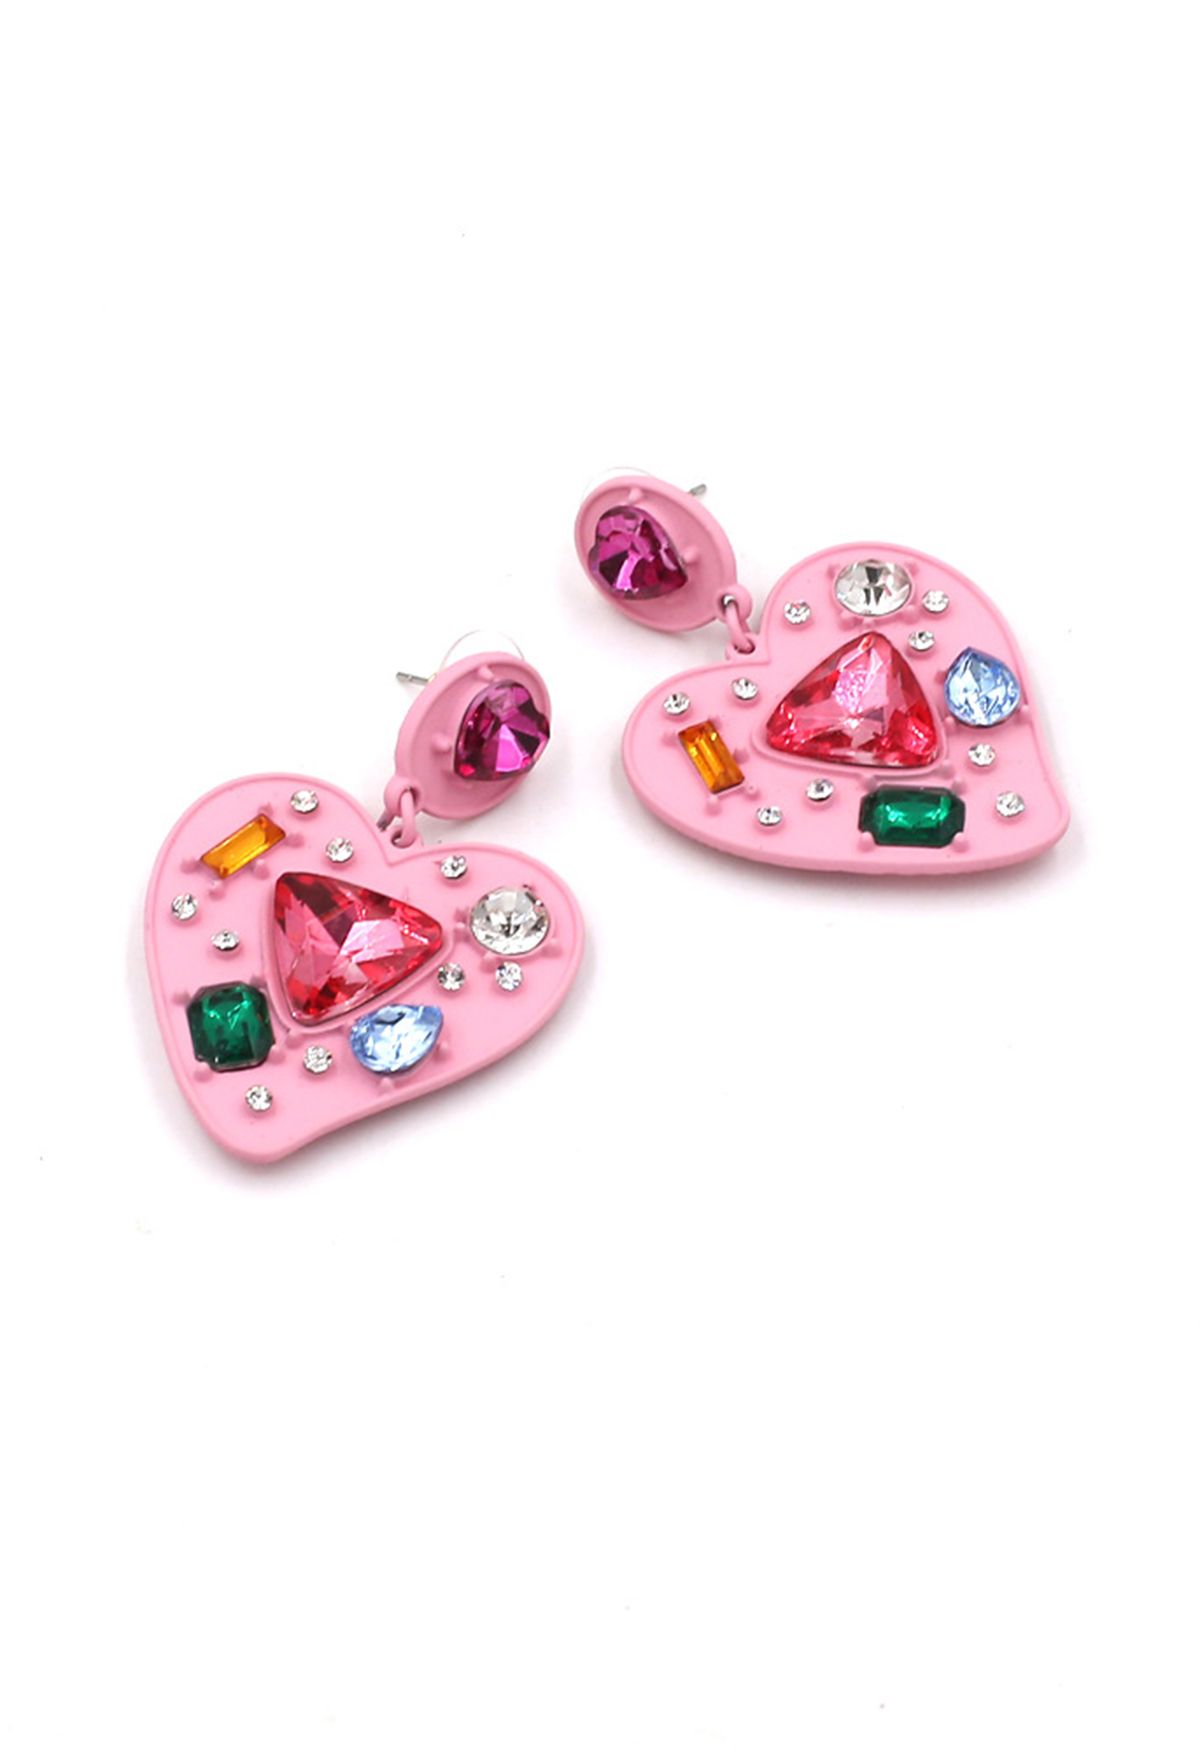 Heart Shape Multi Color Crystal Earrings in Pink